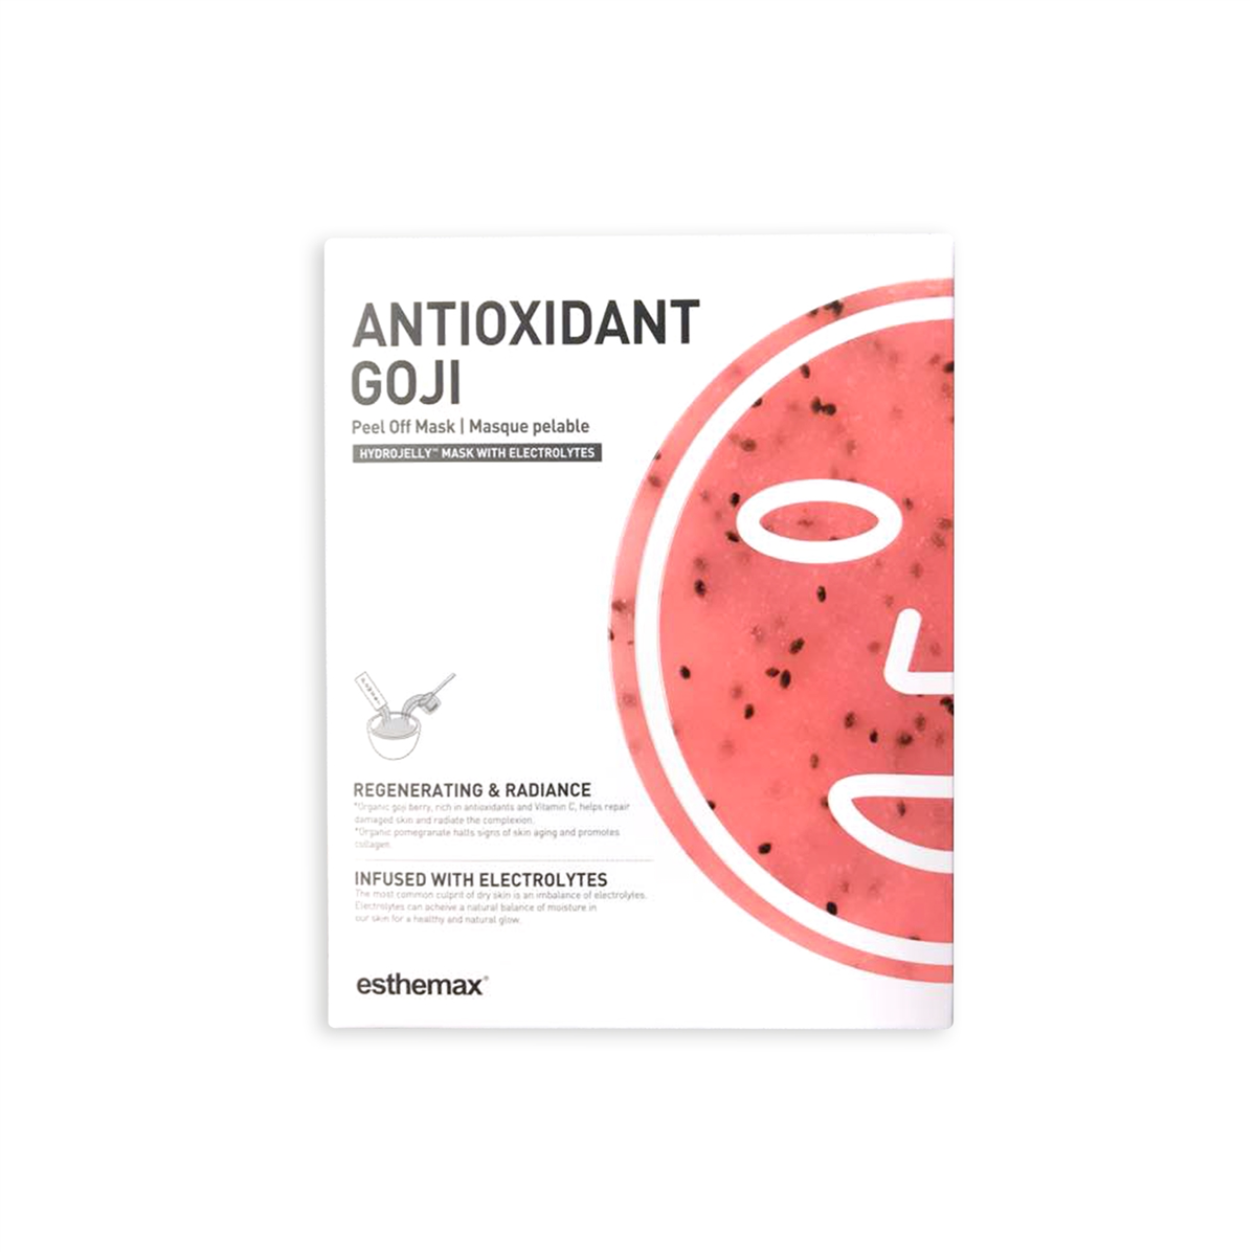 Antioxidant Goji HYDROJELLY Mask